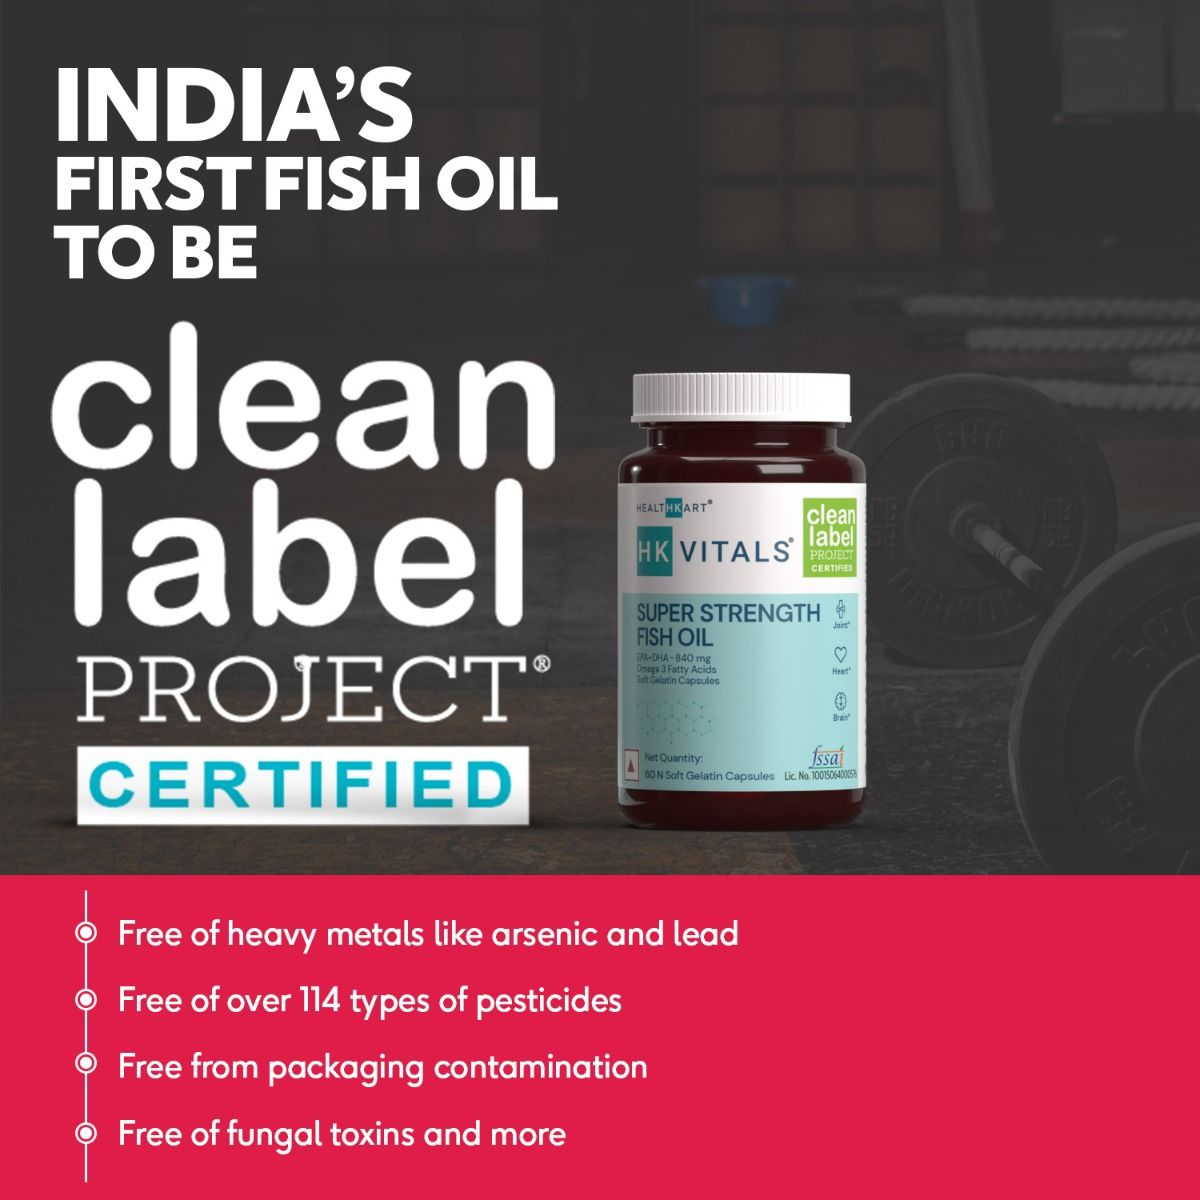 HealthKart HK Vitals Super Strength Fish Oil, 60 Soft Gelatin Capsules, Pack of 1 